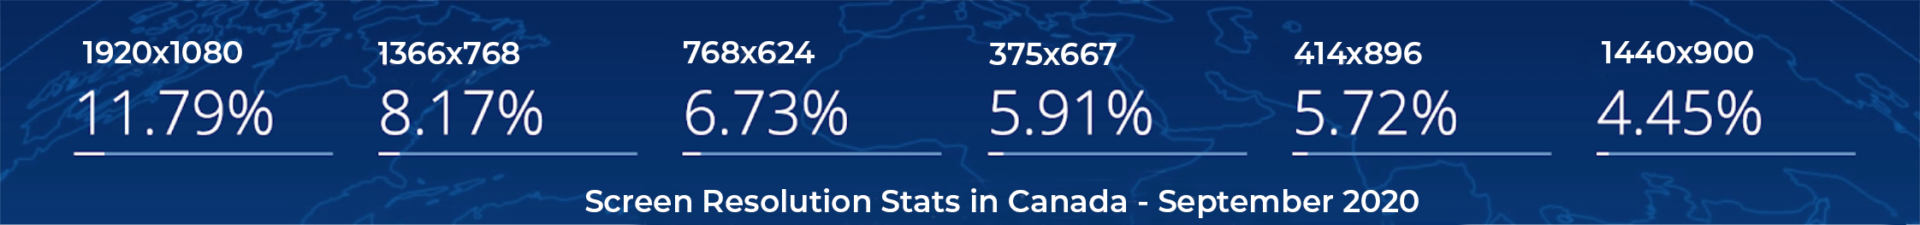 (1920x1080) 11.79% (1366x768) 8.17% (768x624) 6.73% (375x667) 5.91% (414x896) 5.72% (1440x900) 4.45%. Screen Resolution Stats in Canada - September 2020